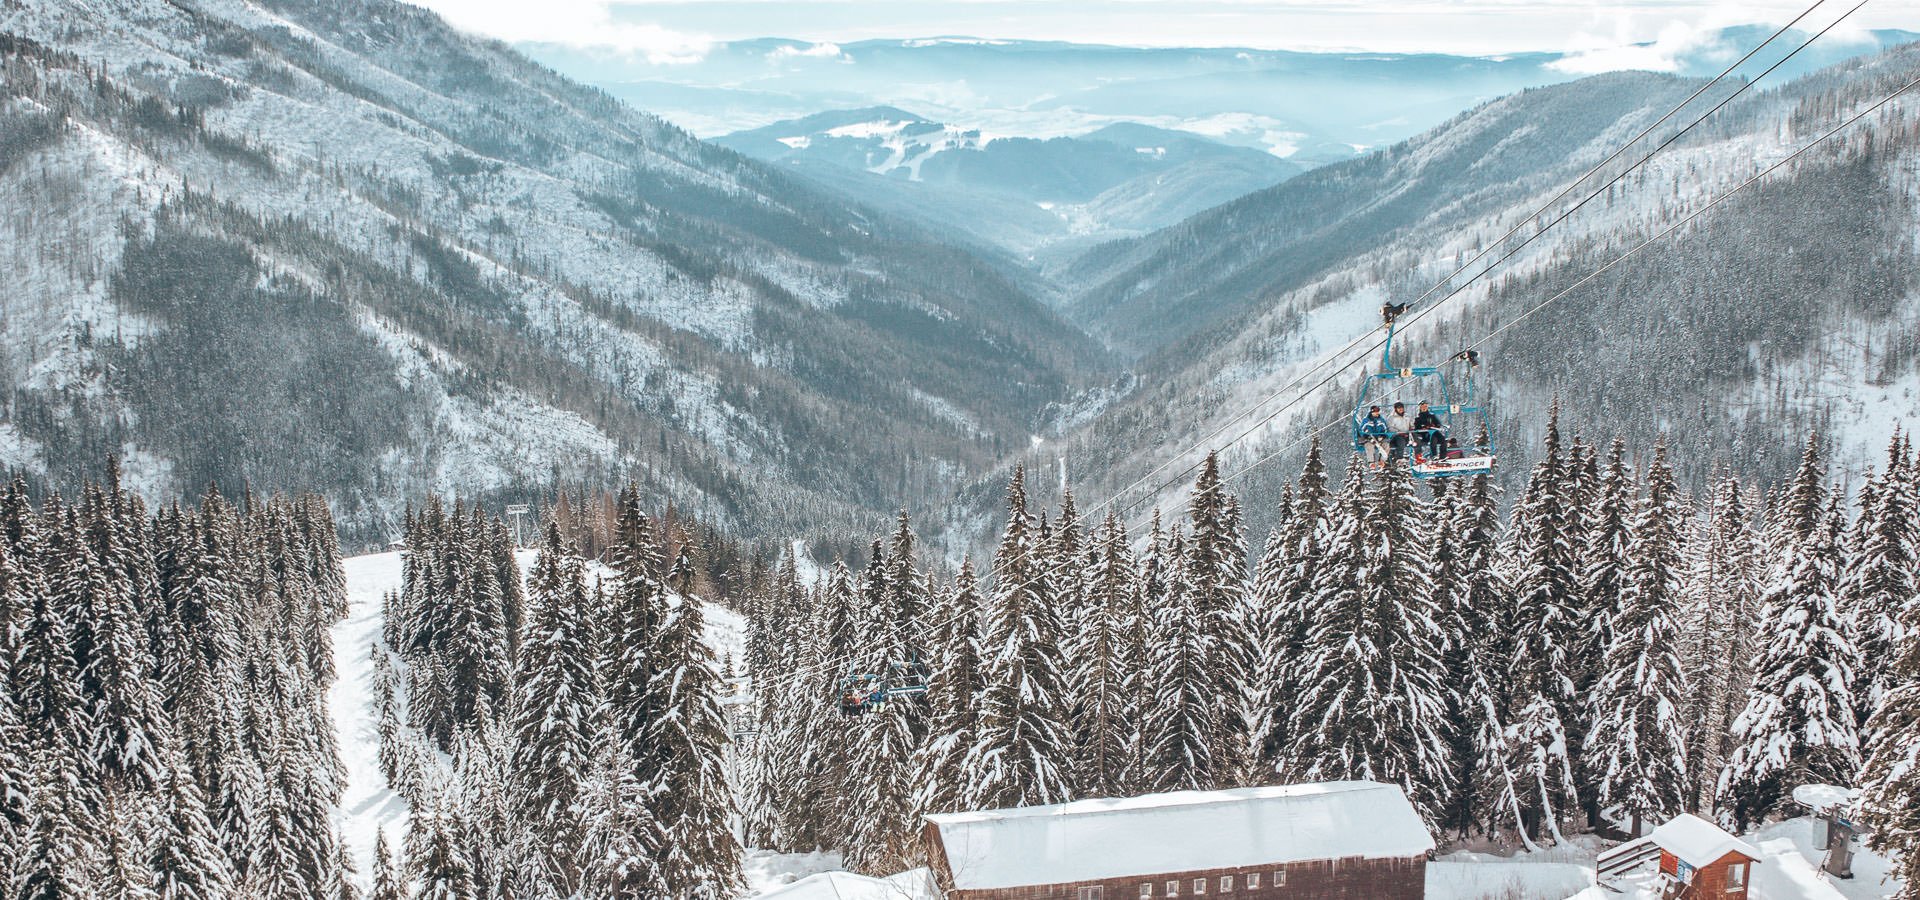 How To Plan A Snowboarding Holiday In Jasná, Slovakia | weekend in český krumlov 5